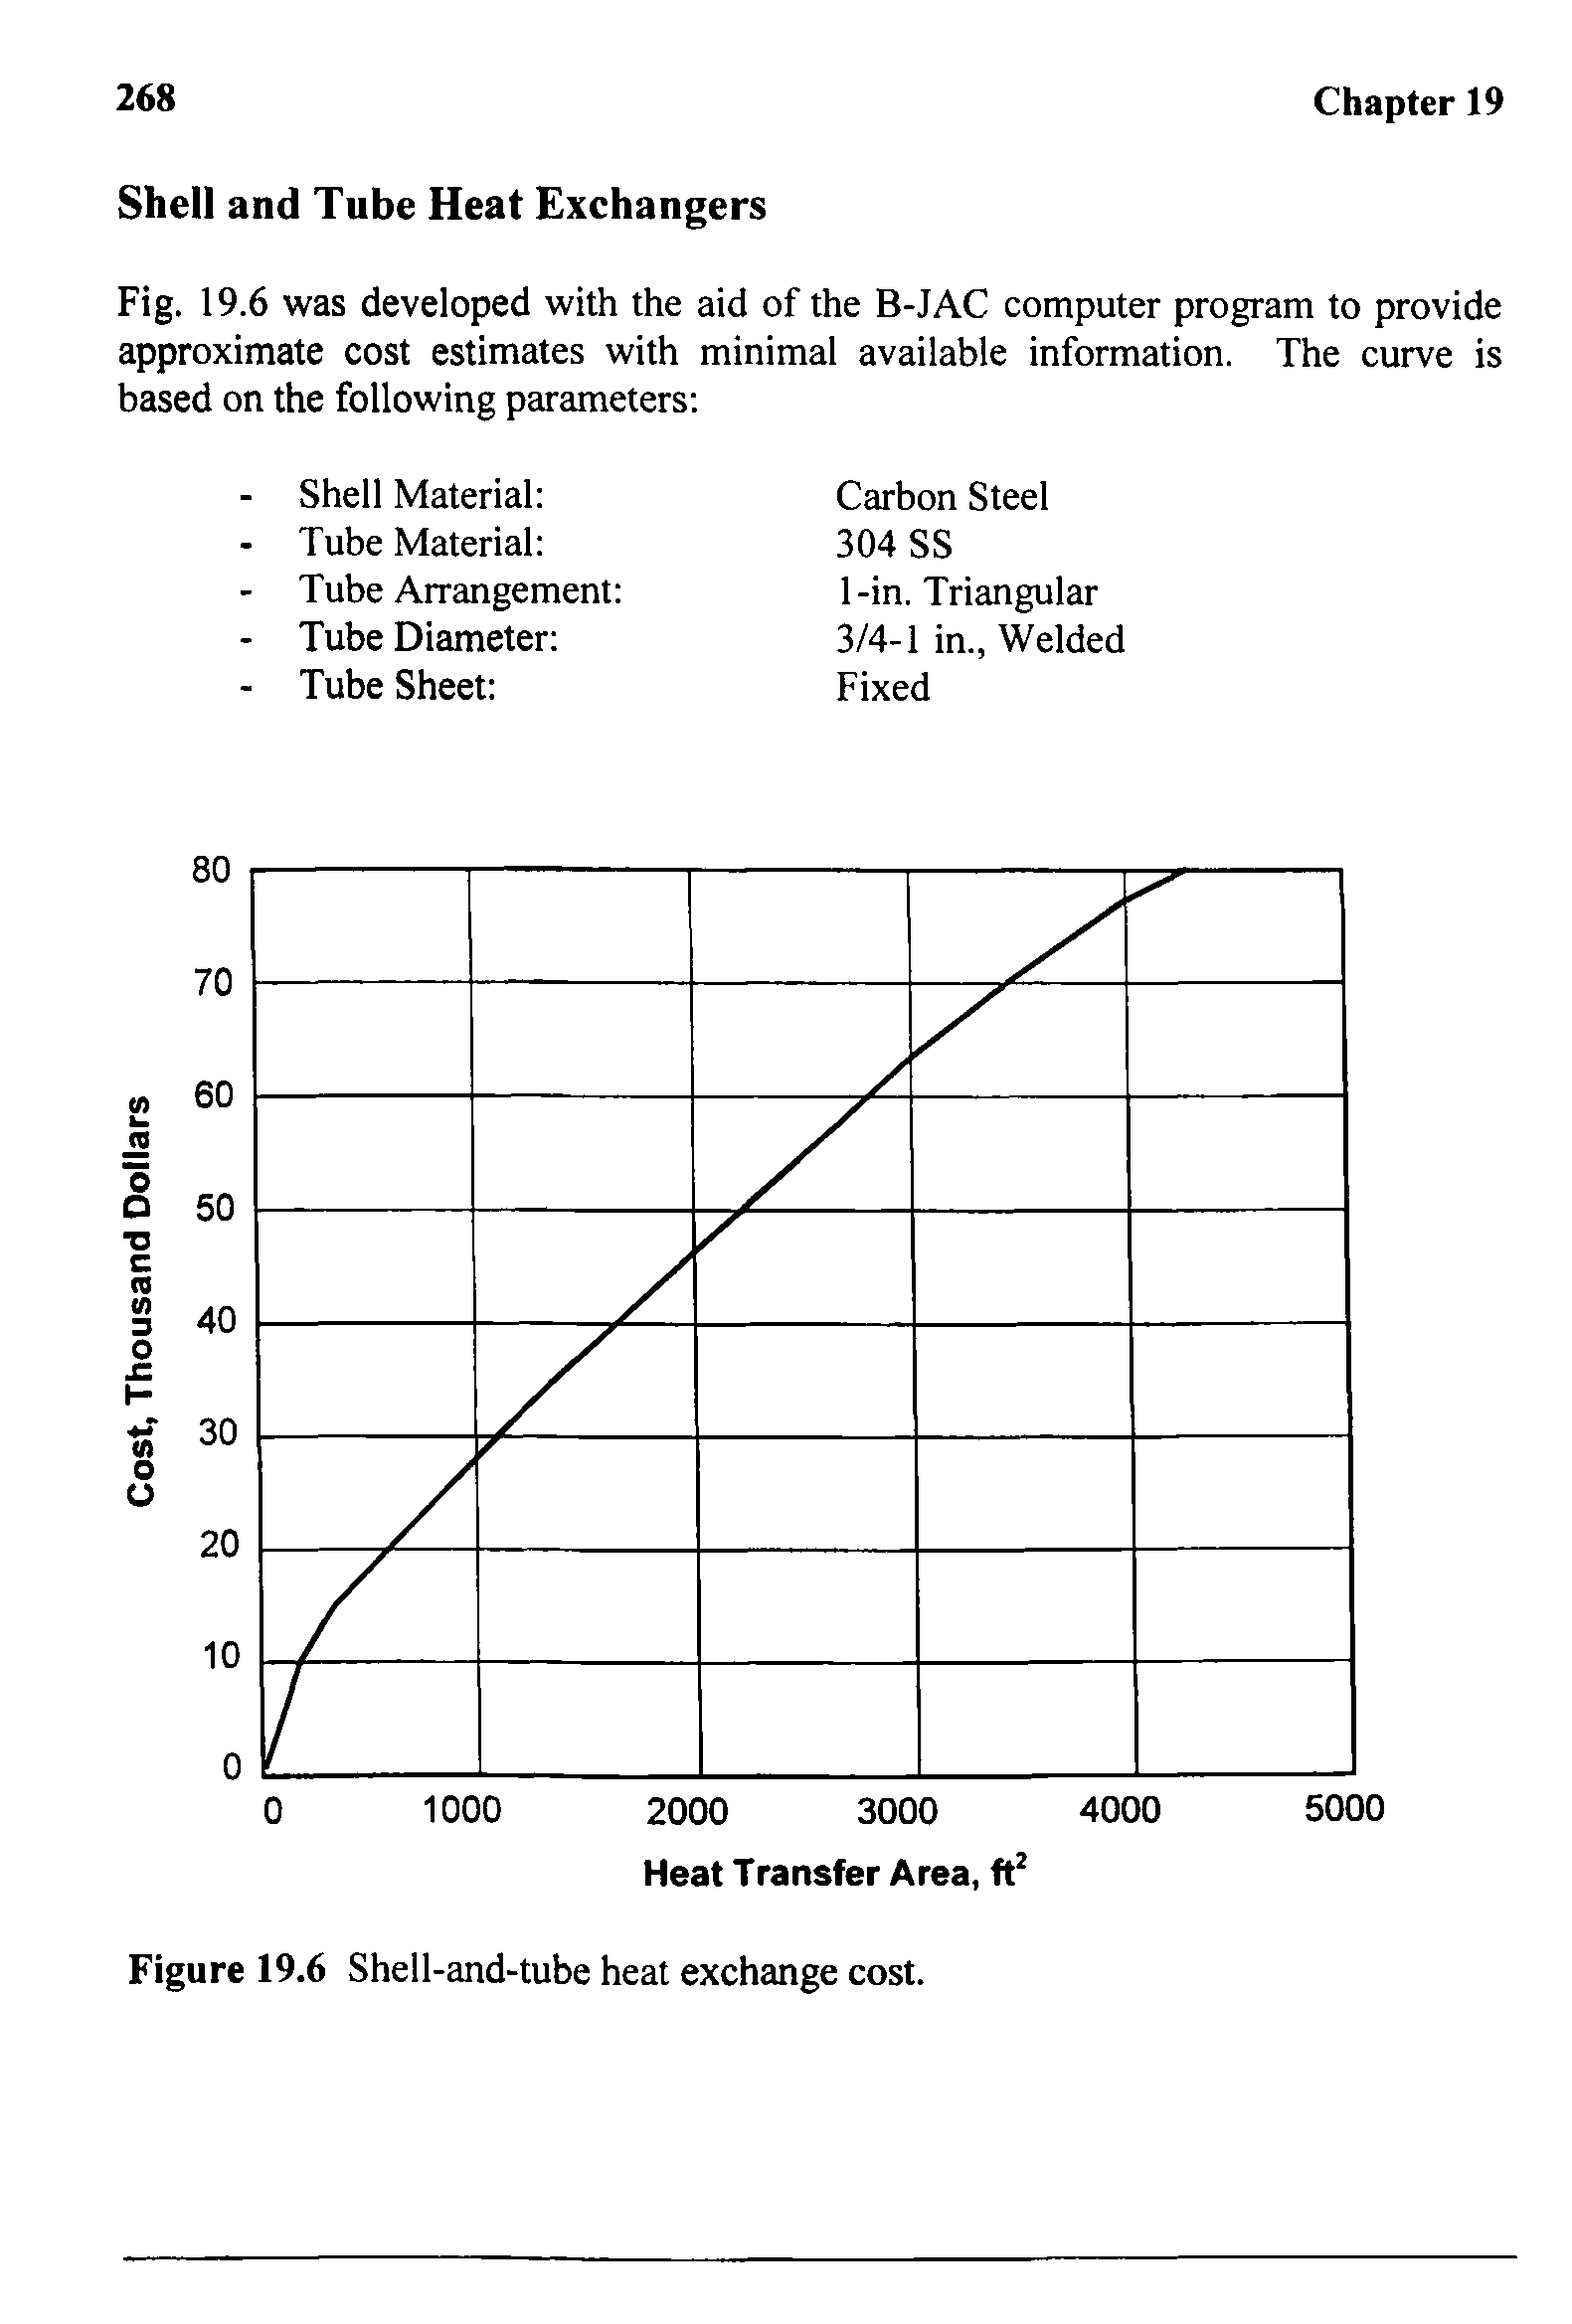 Figure 19.6 Shell-and-tube heat exchange cost.